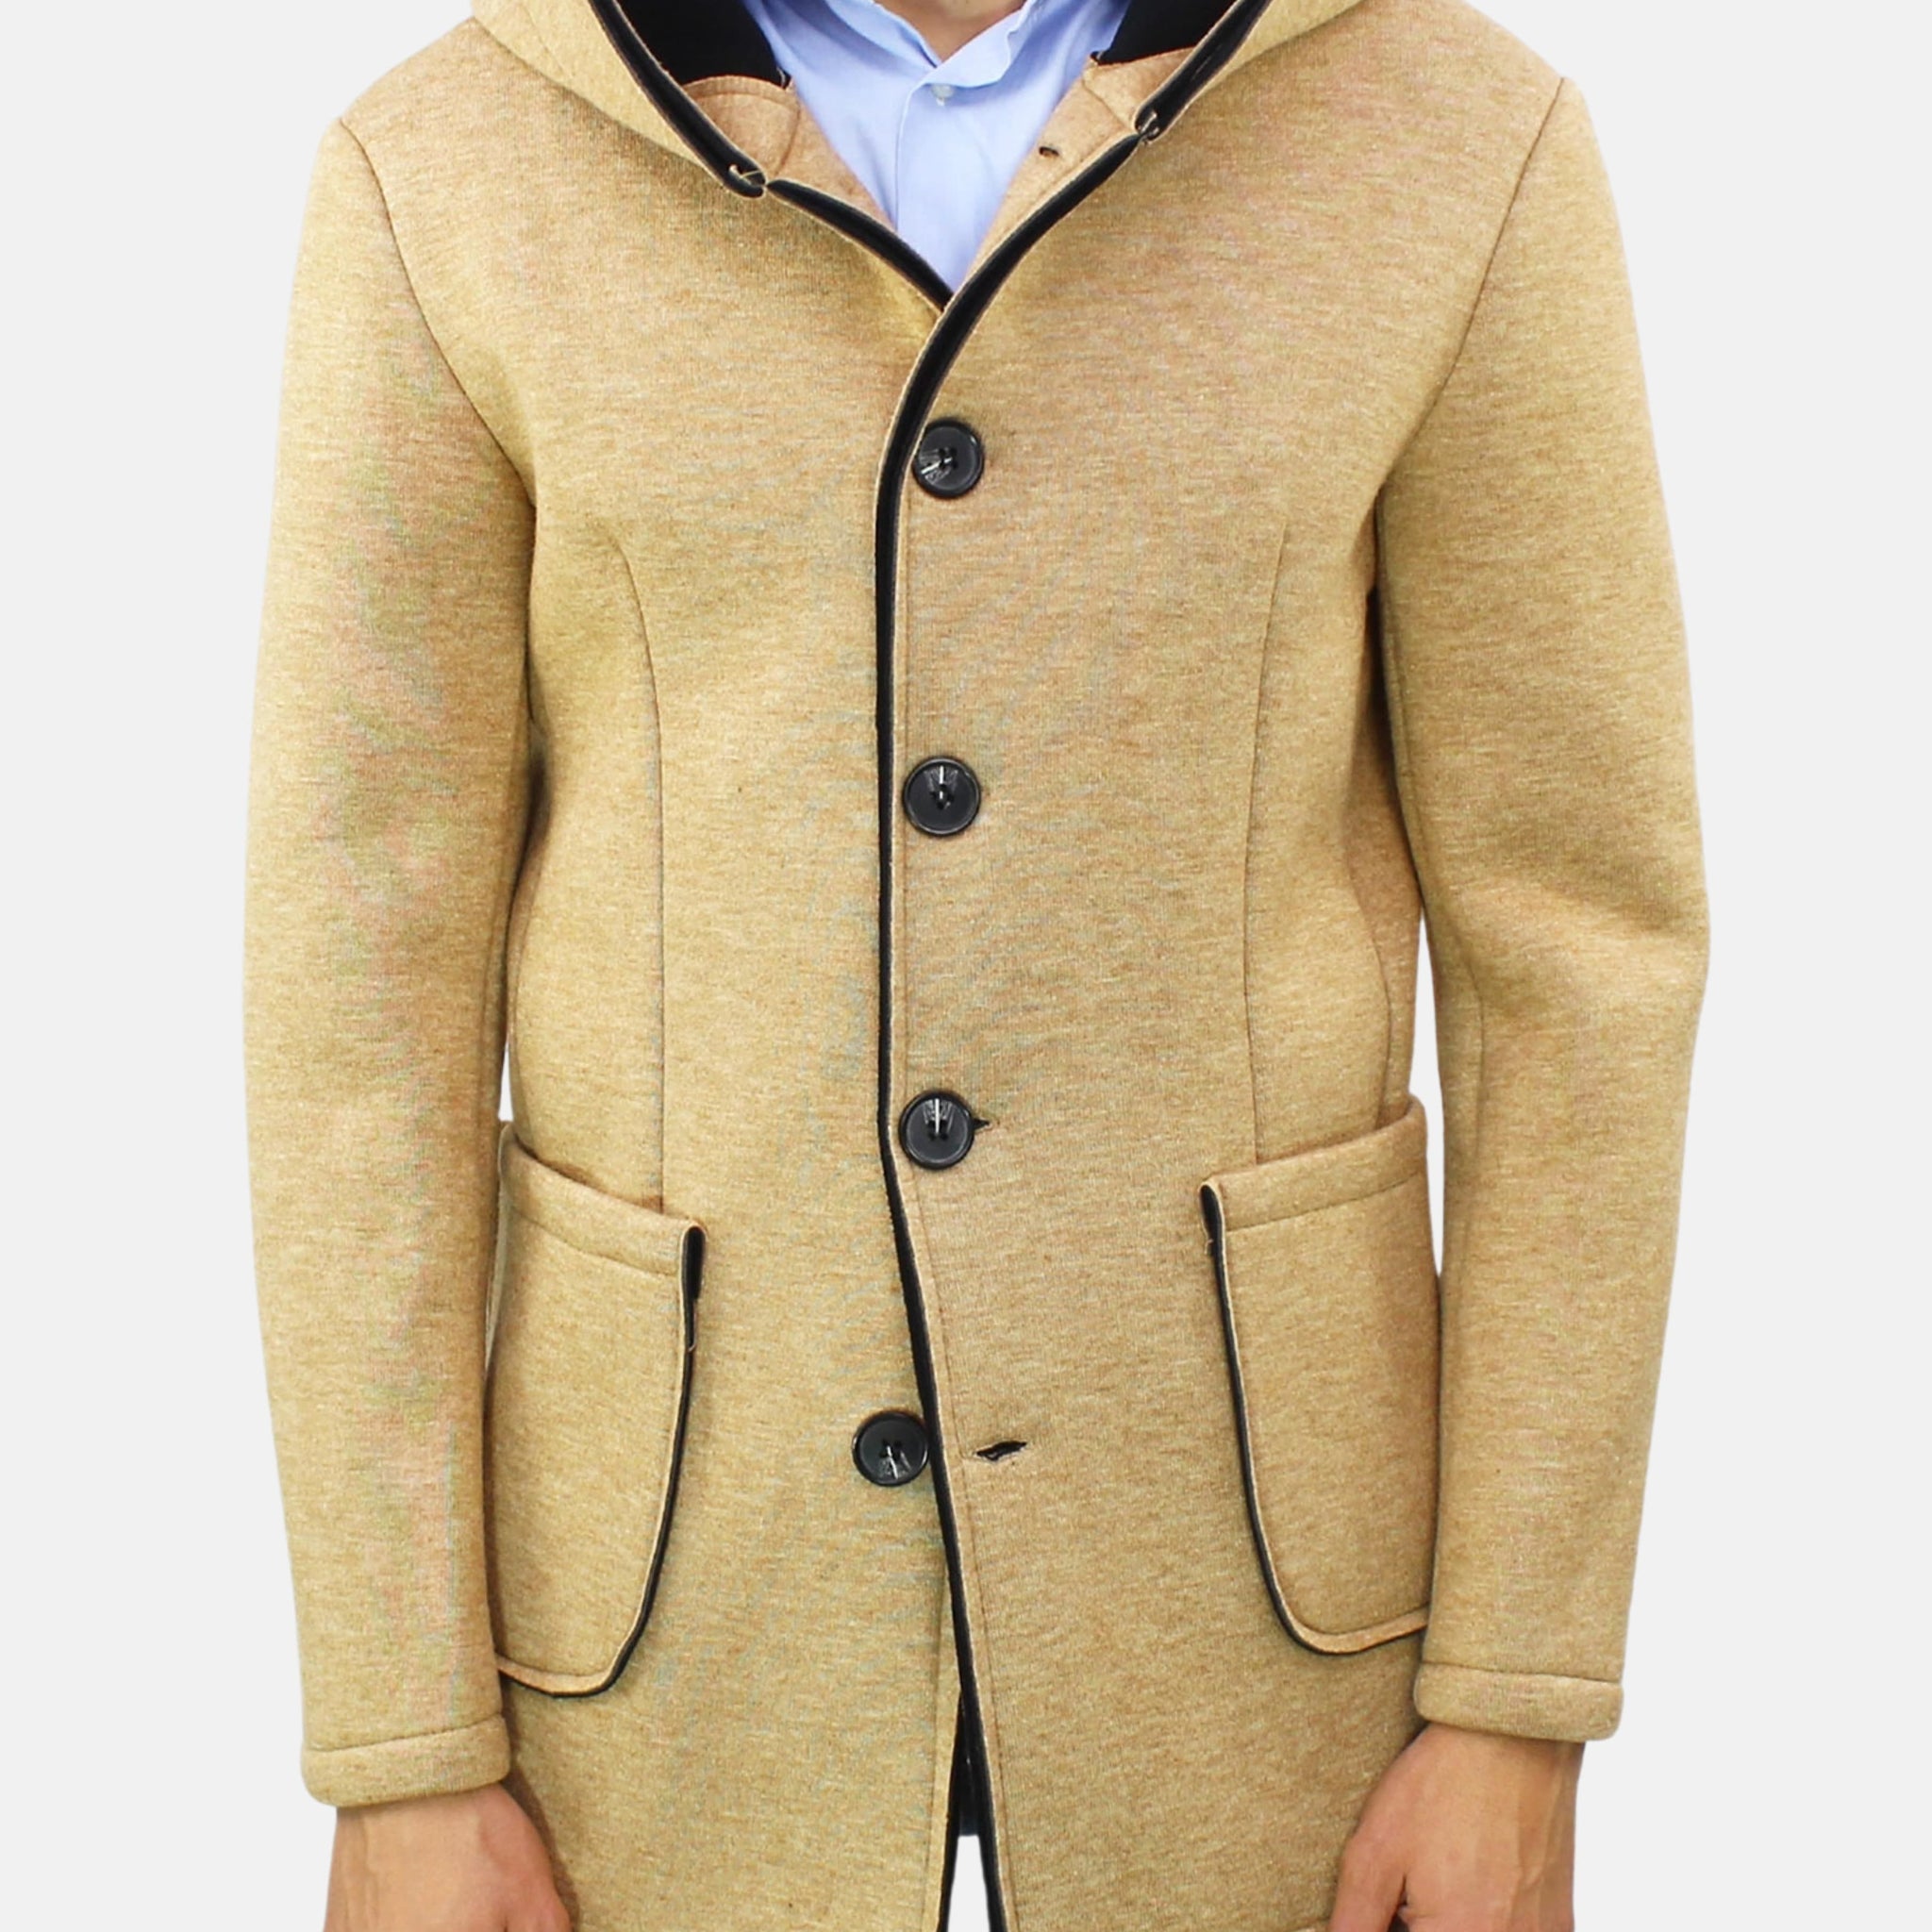 Cloth coat with hood